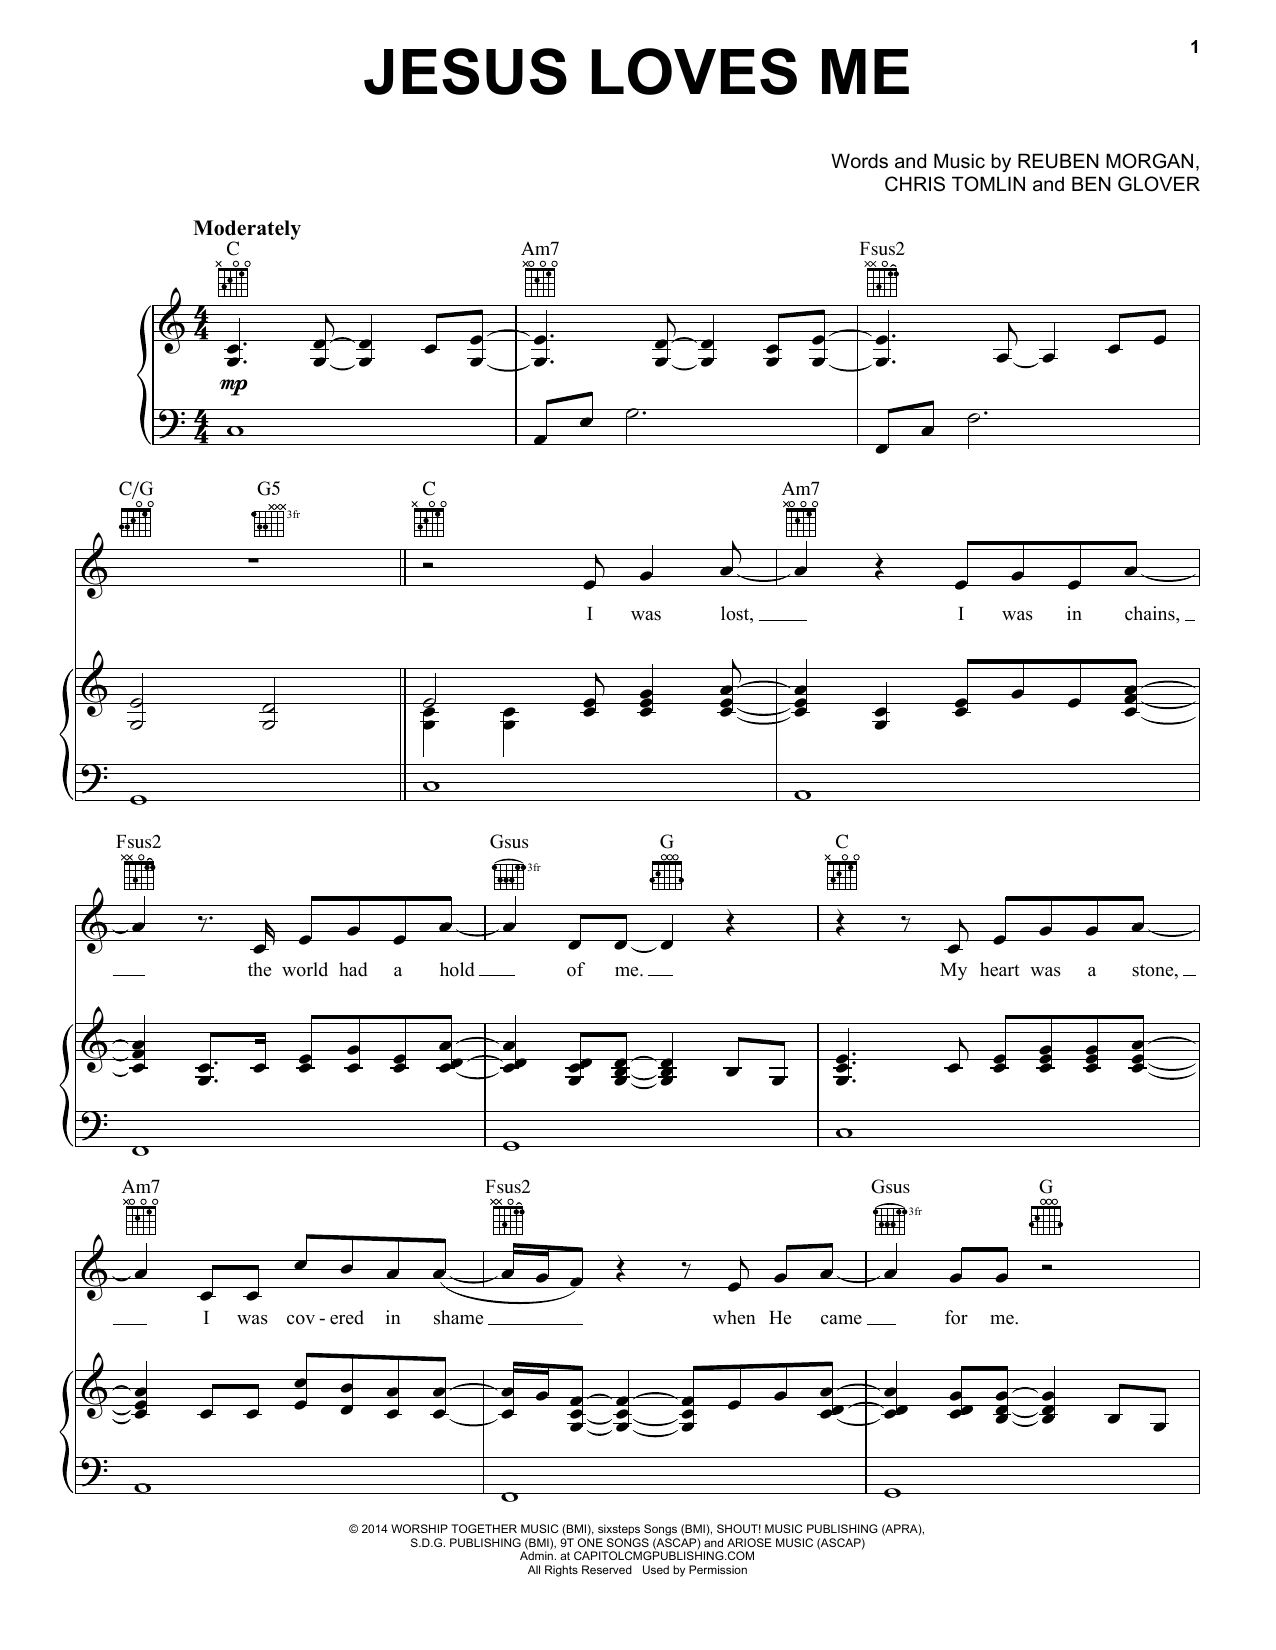 Chris Tomlin Jesus Loves Me Sheet Music Notes & Chords for Melody Line, Lyrics & Chords - Download or Print PDF